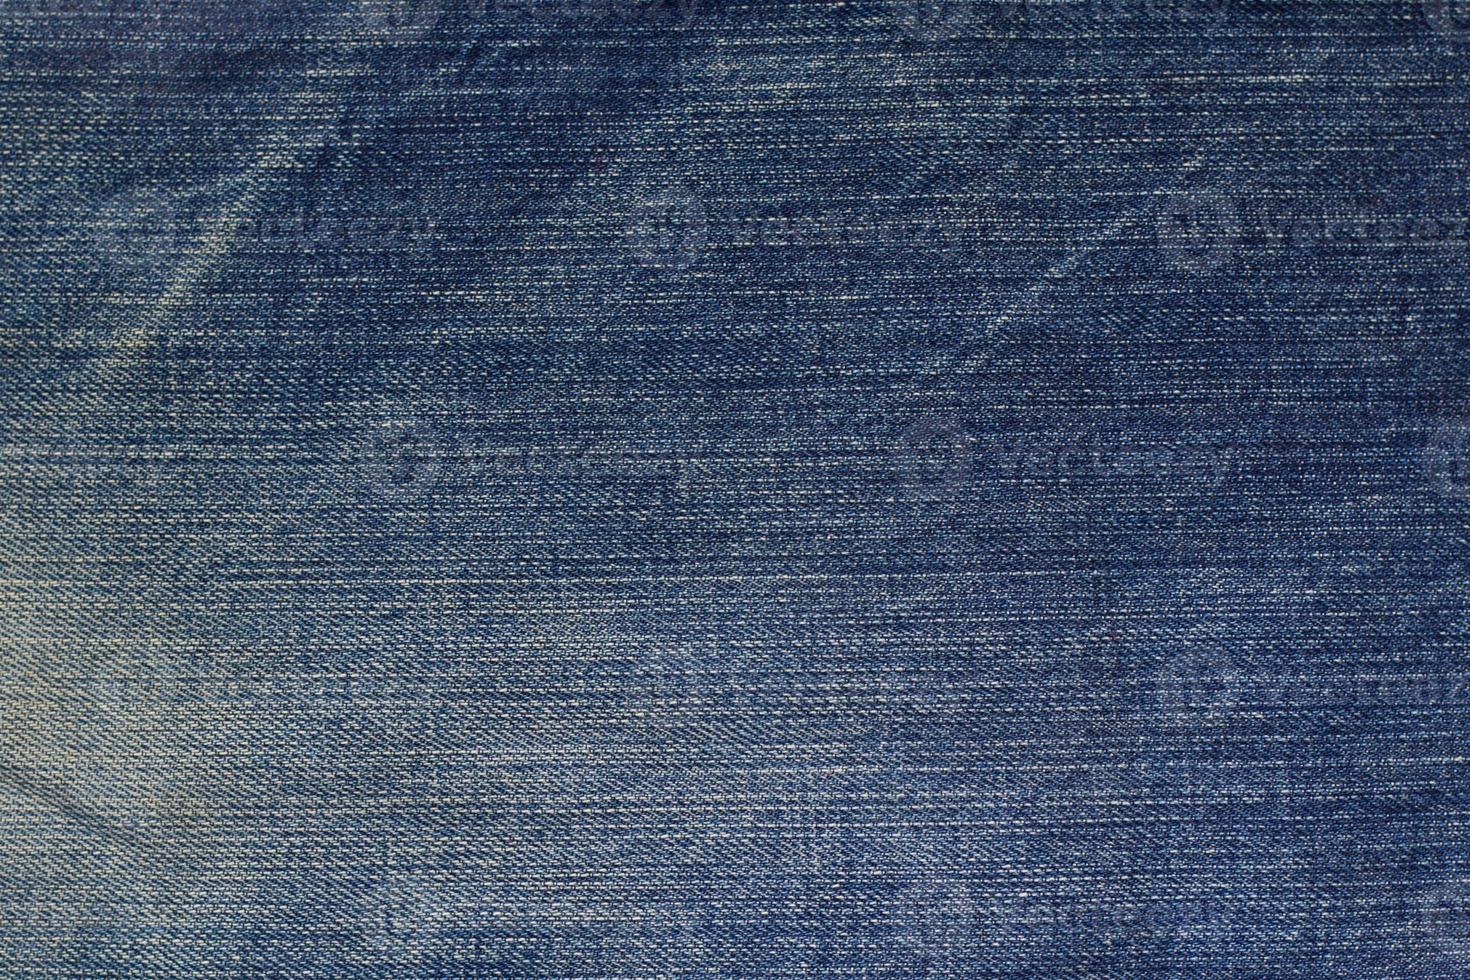 Blue jeans denim texture background photo